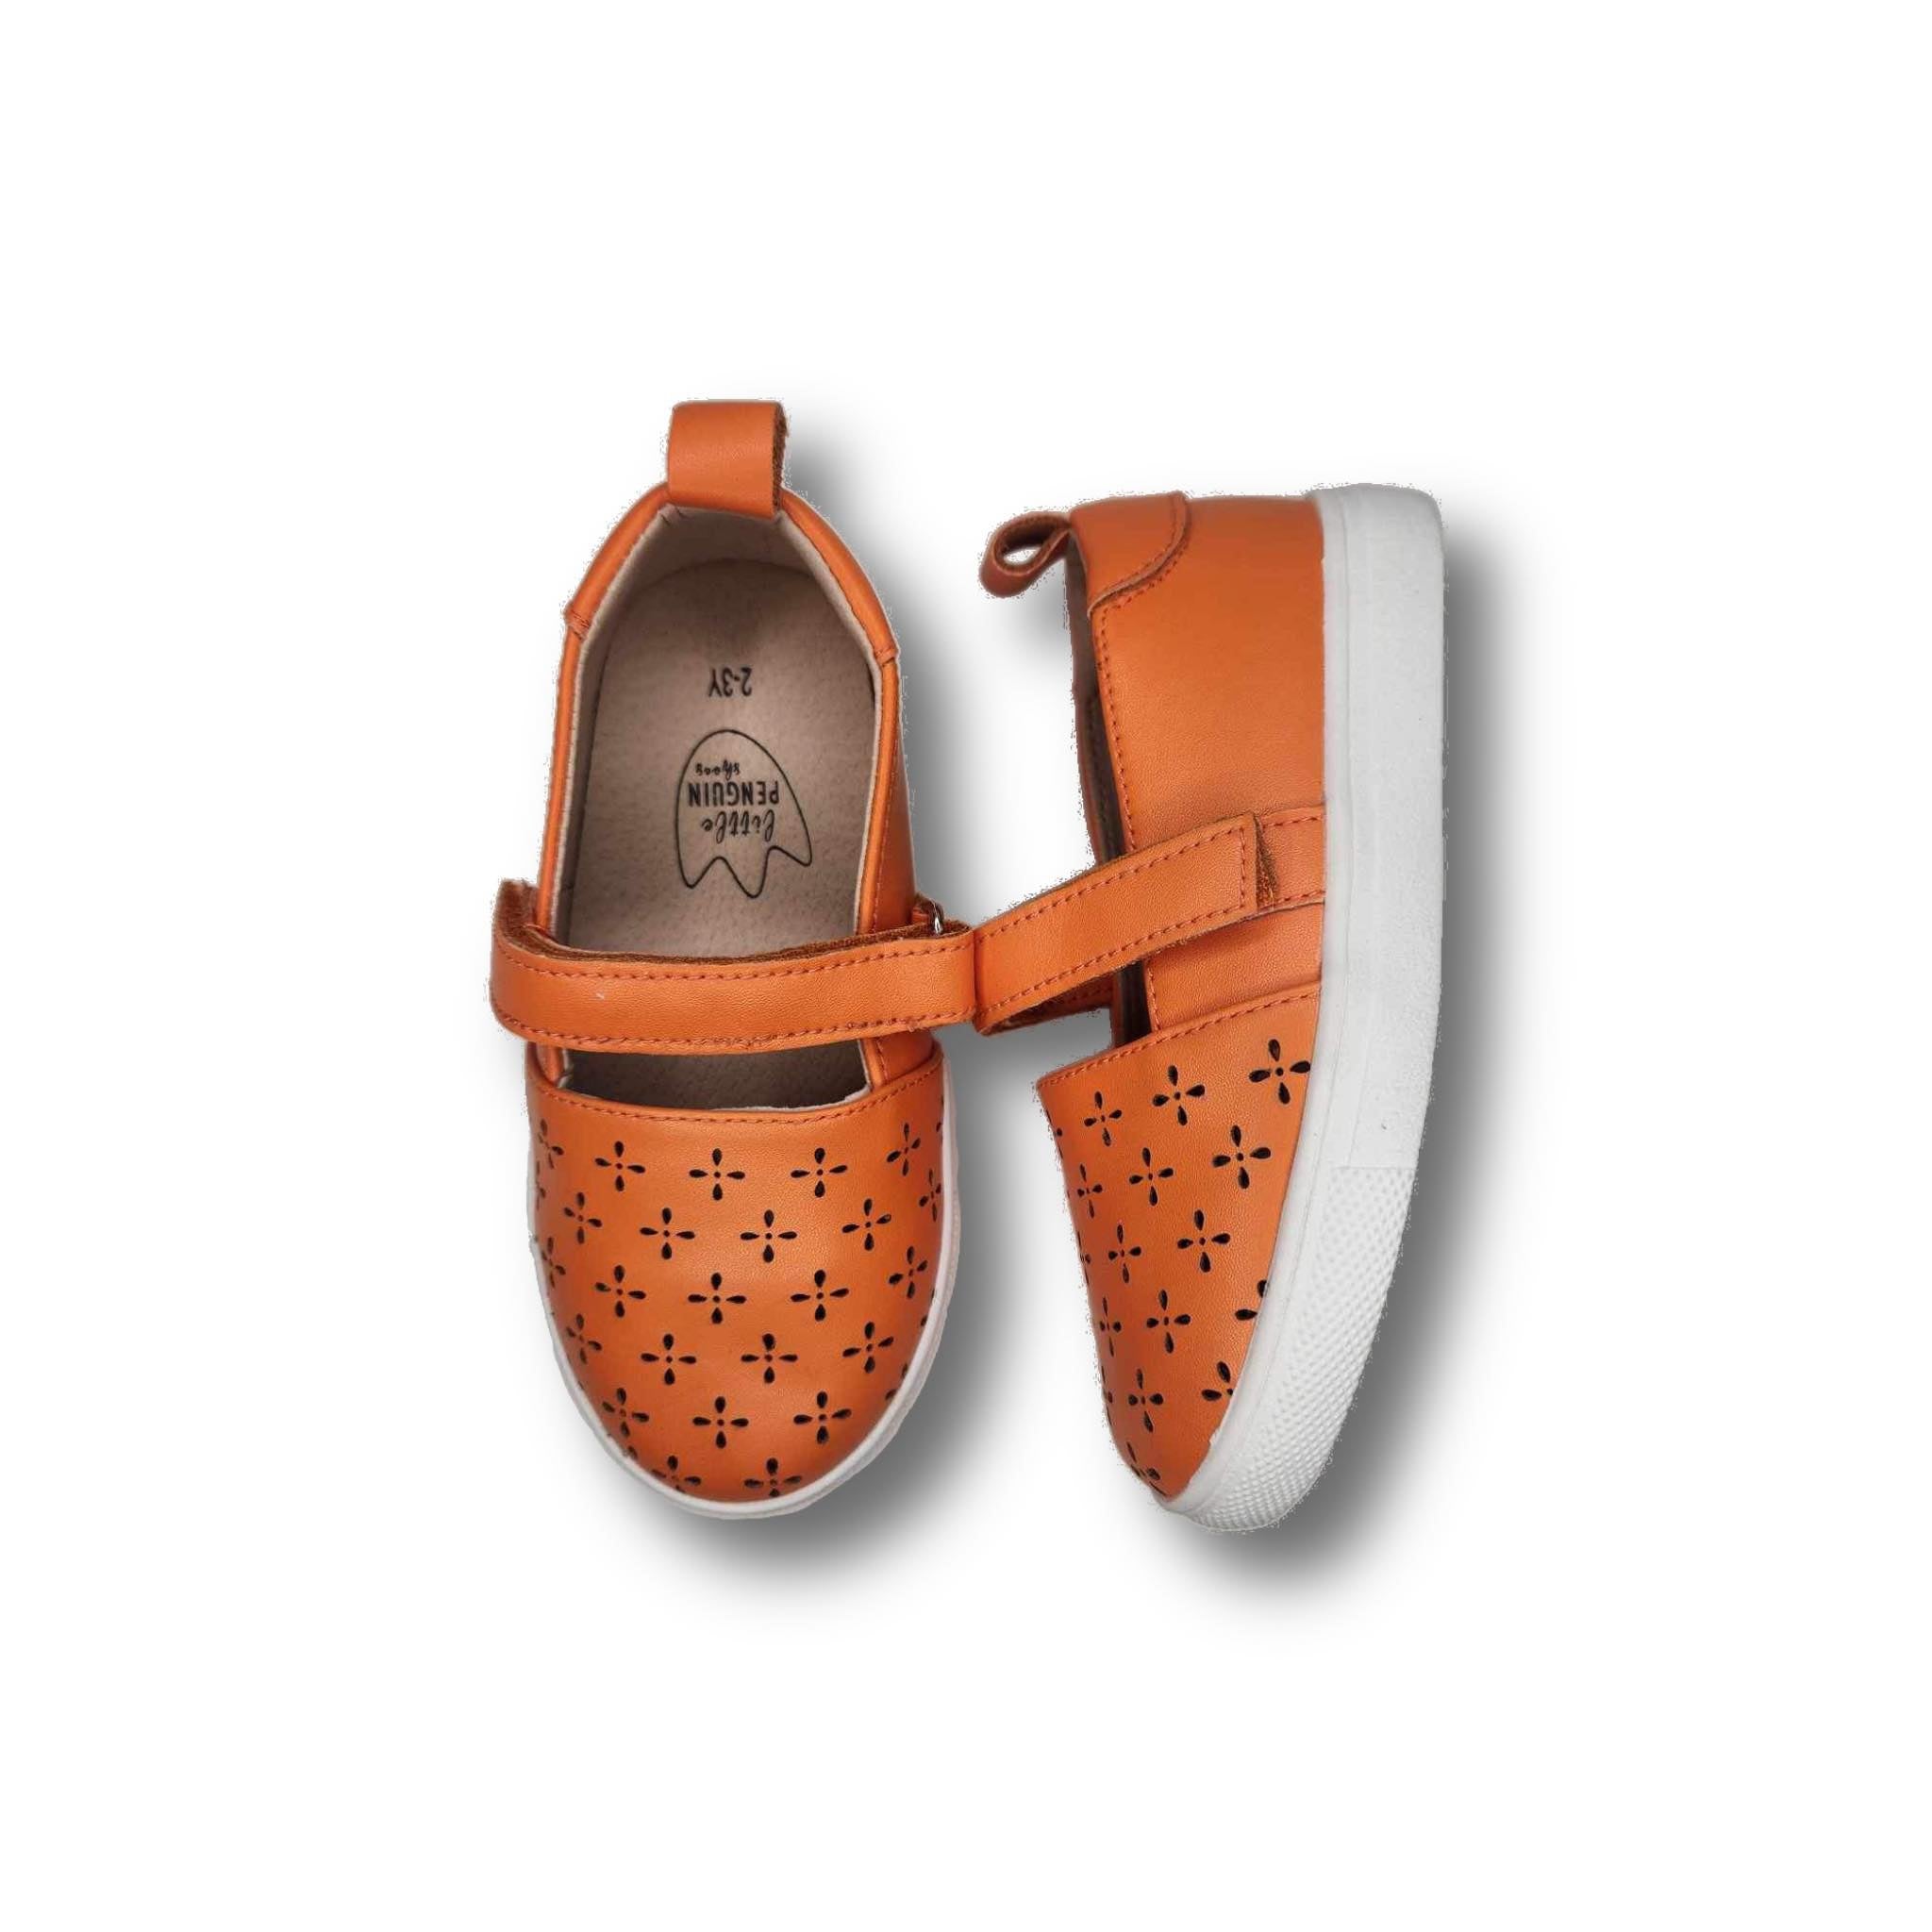 WILLA Children's Low-Top Sneaker in Orange Leather